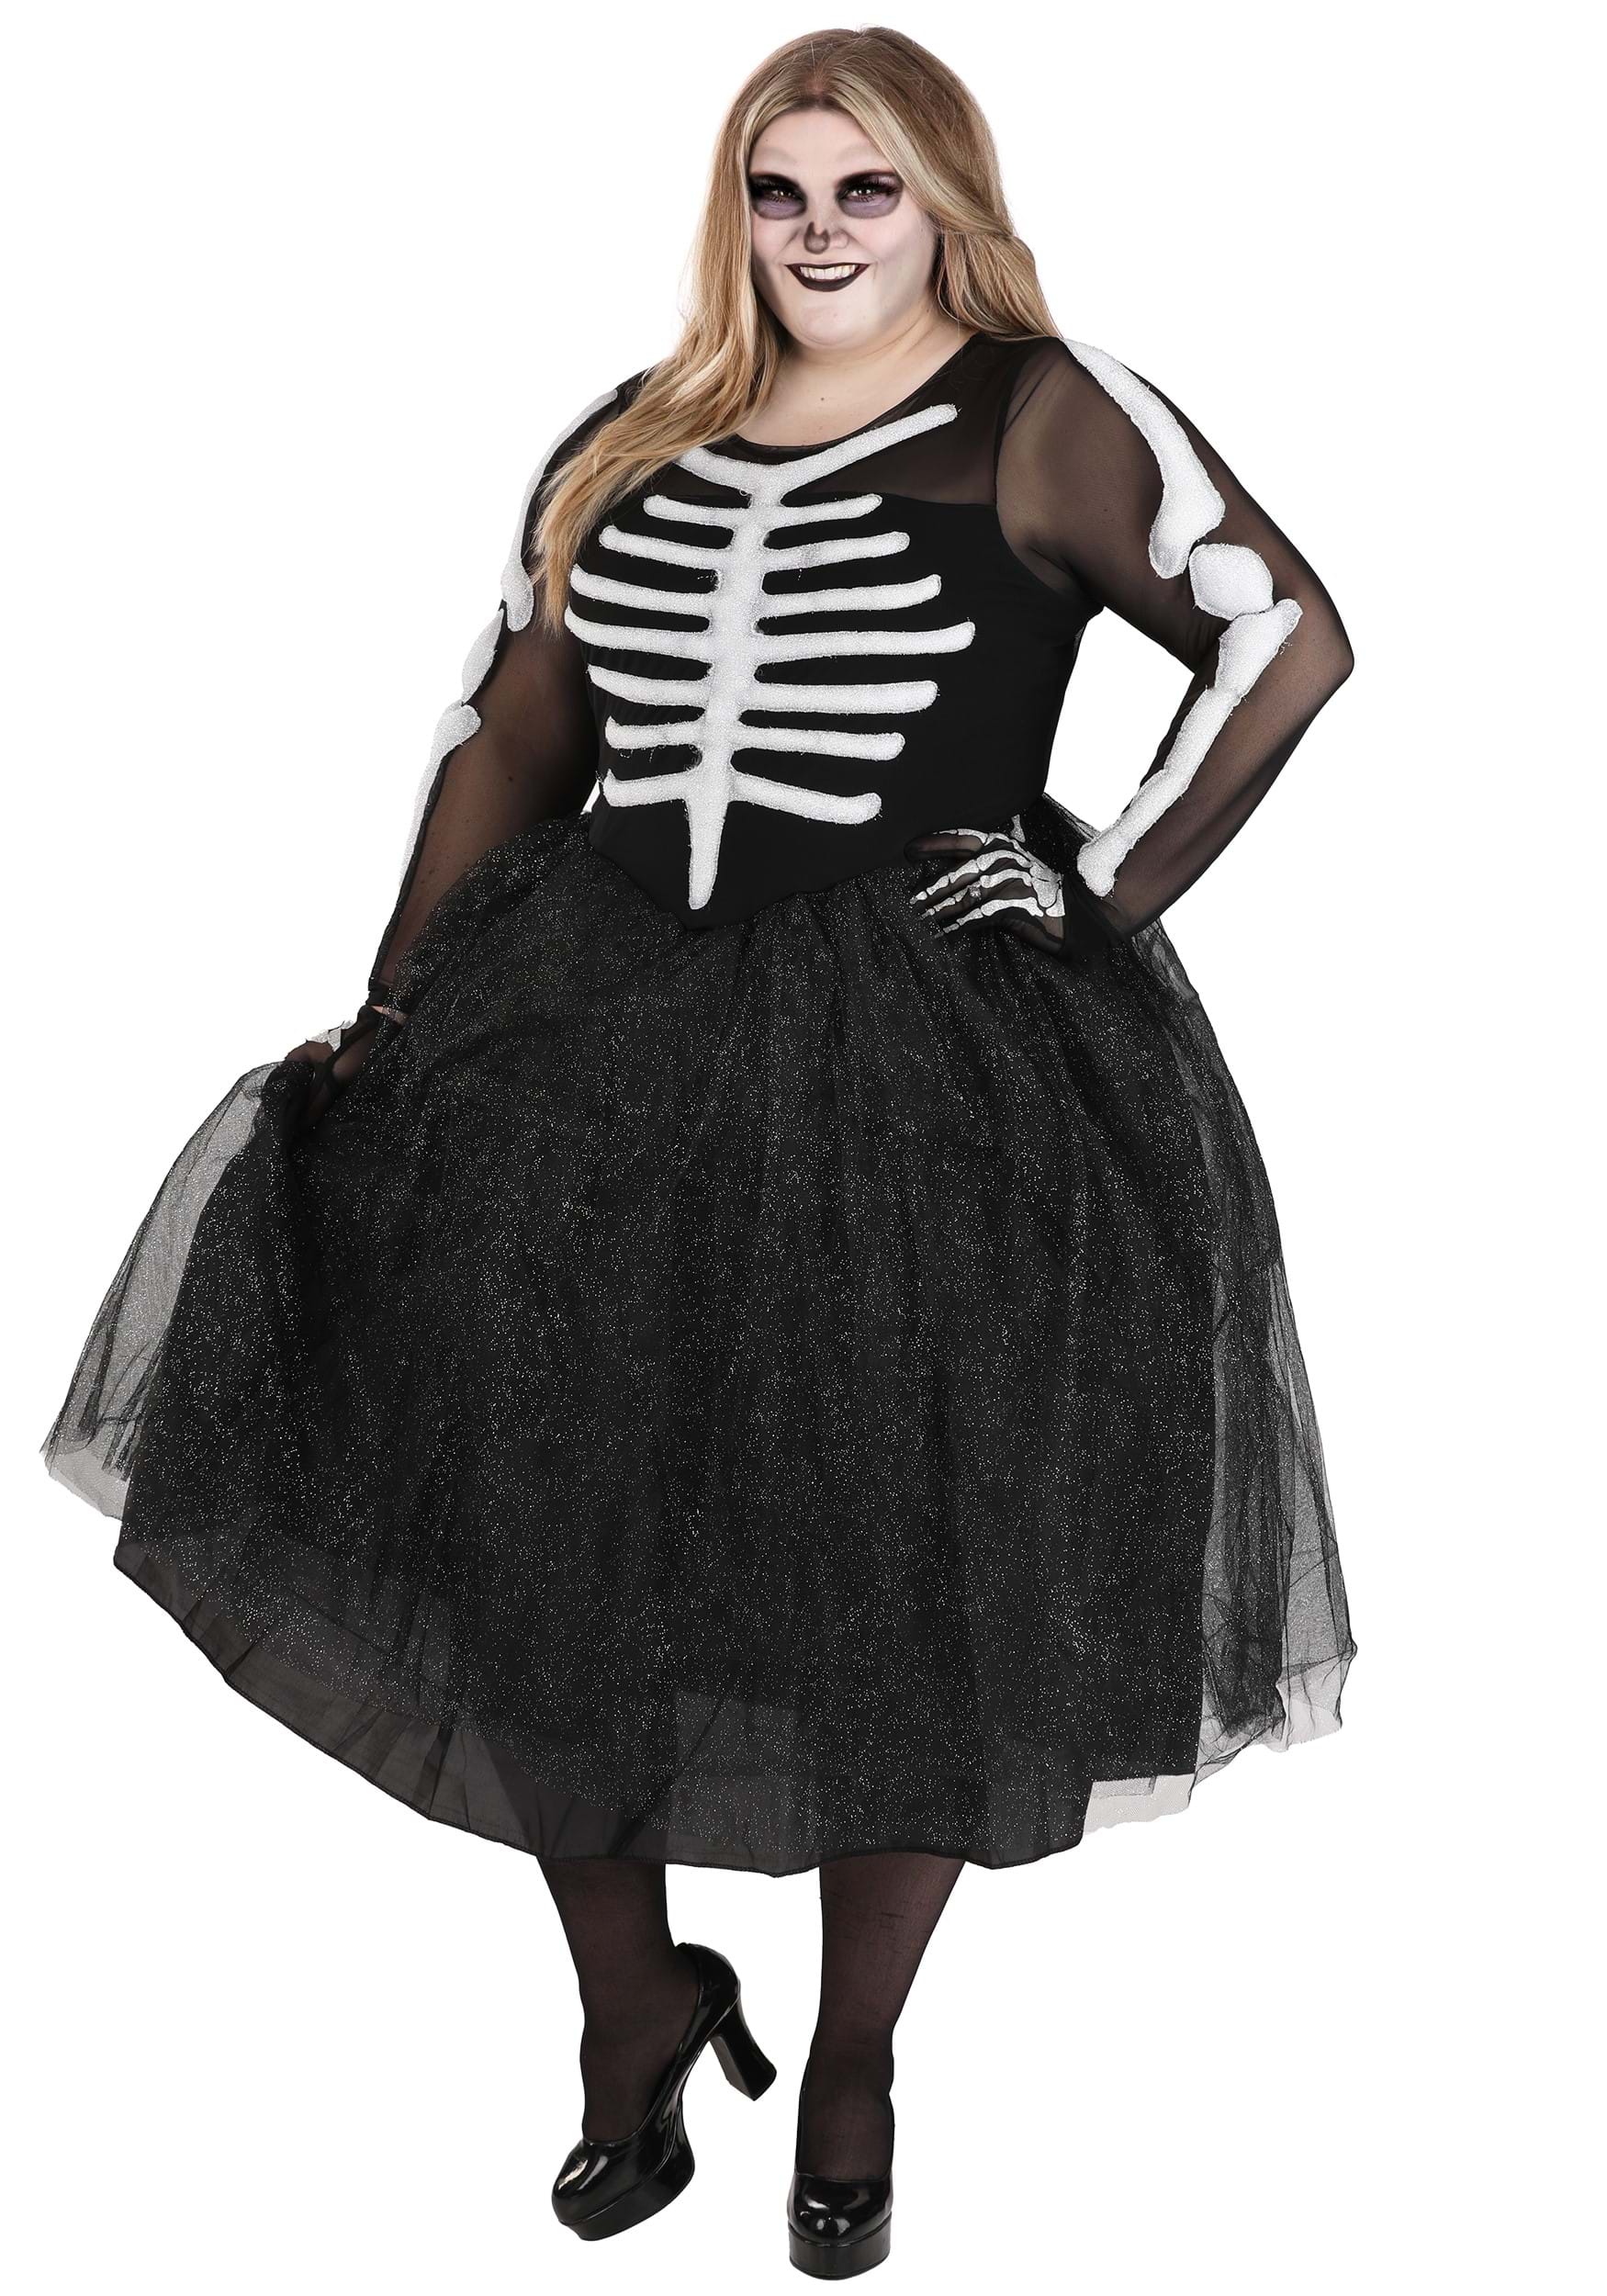 Image of Women's Skeleton Beauty Plus Size Costume ID FUN2691PL-2X